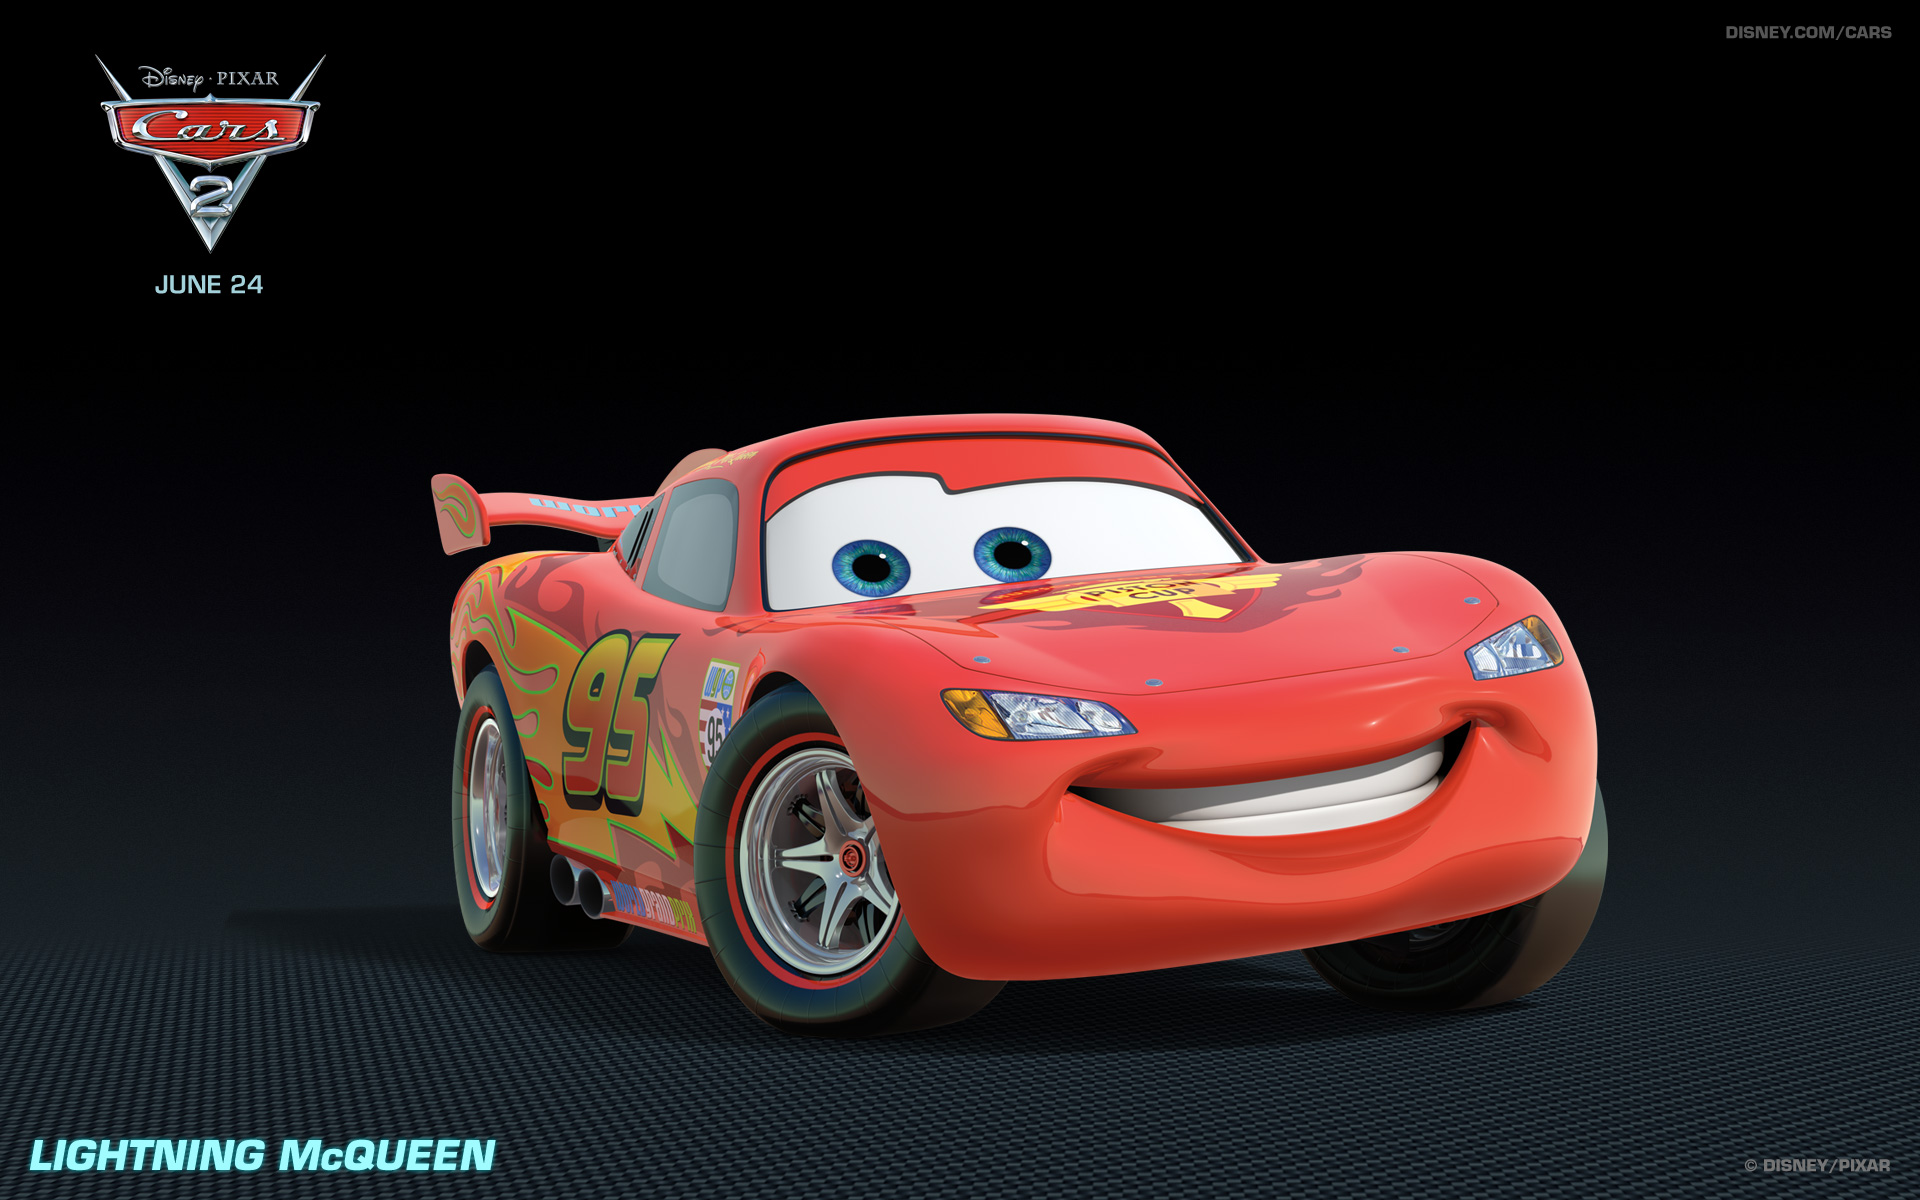 Lightning McQueen the Race Car from Disney's Cars 2 HD Desktop Wallpaper